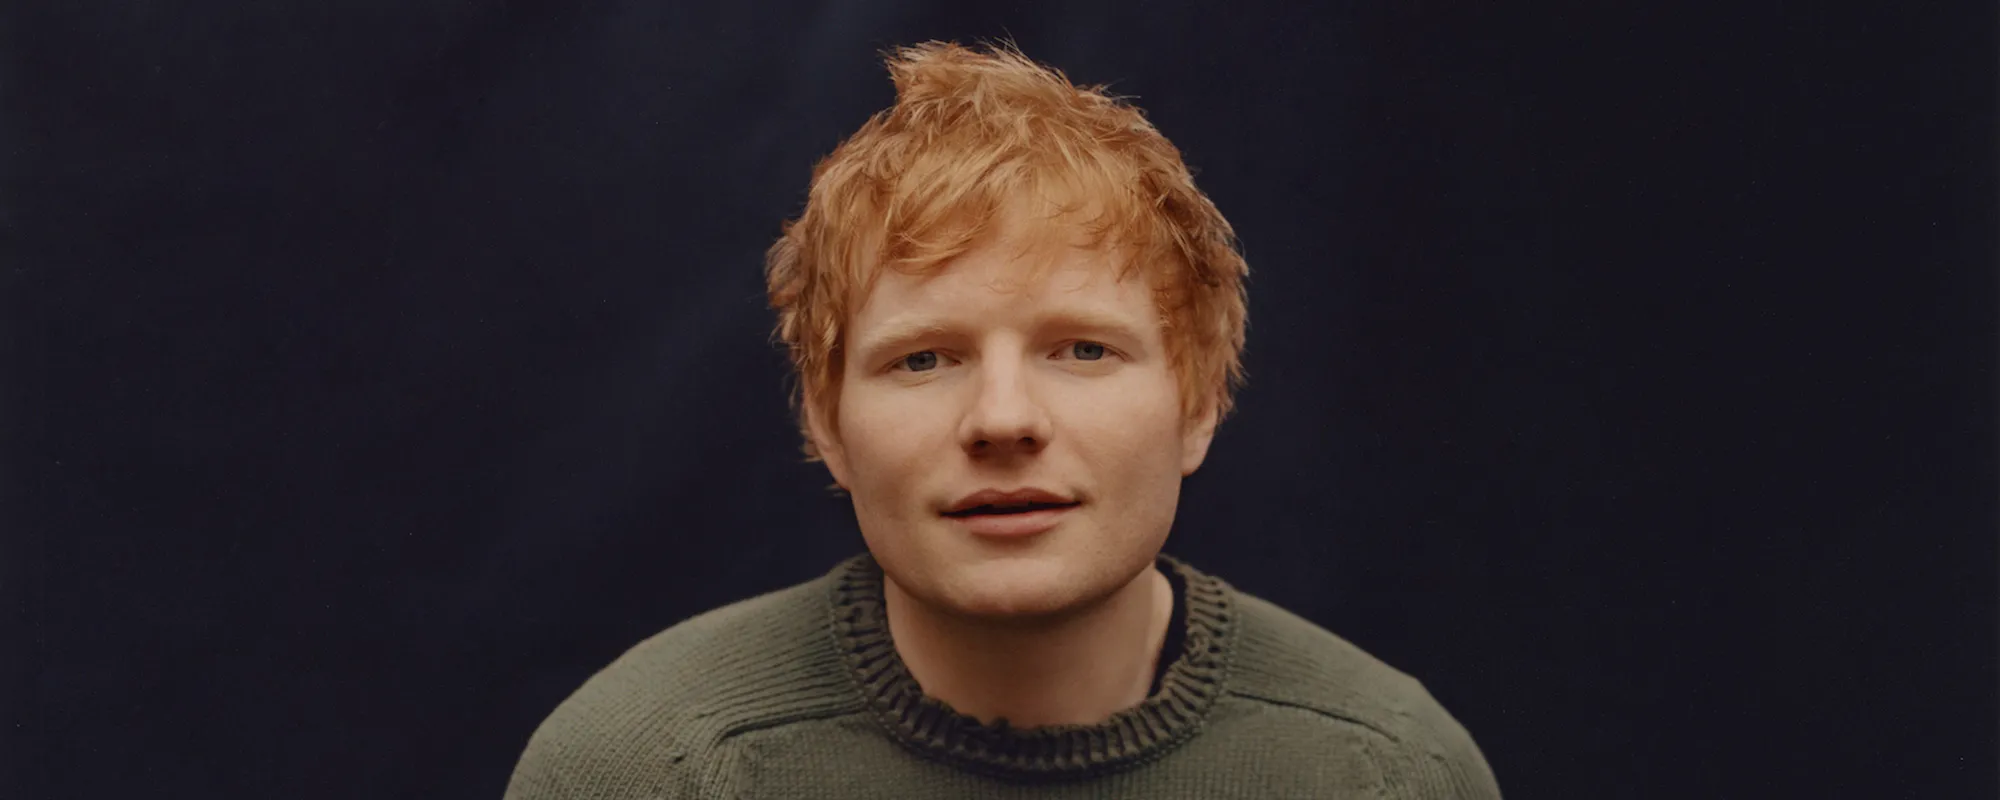 Ed Sheeran Says “Shape of You” Lawsuit False